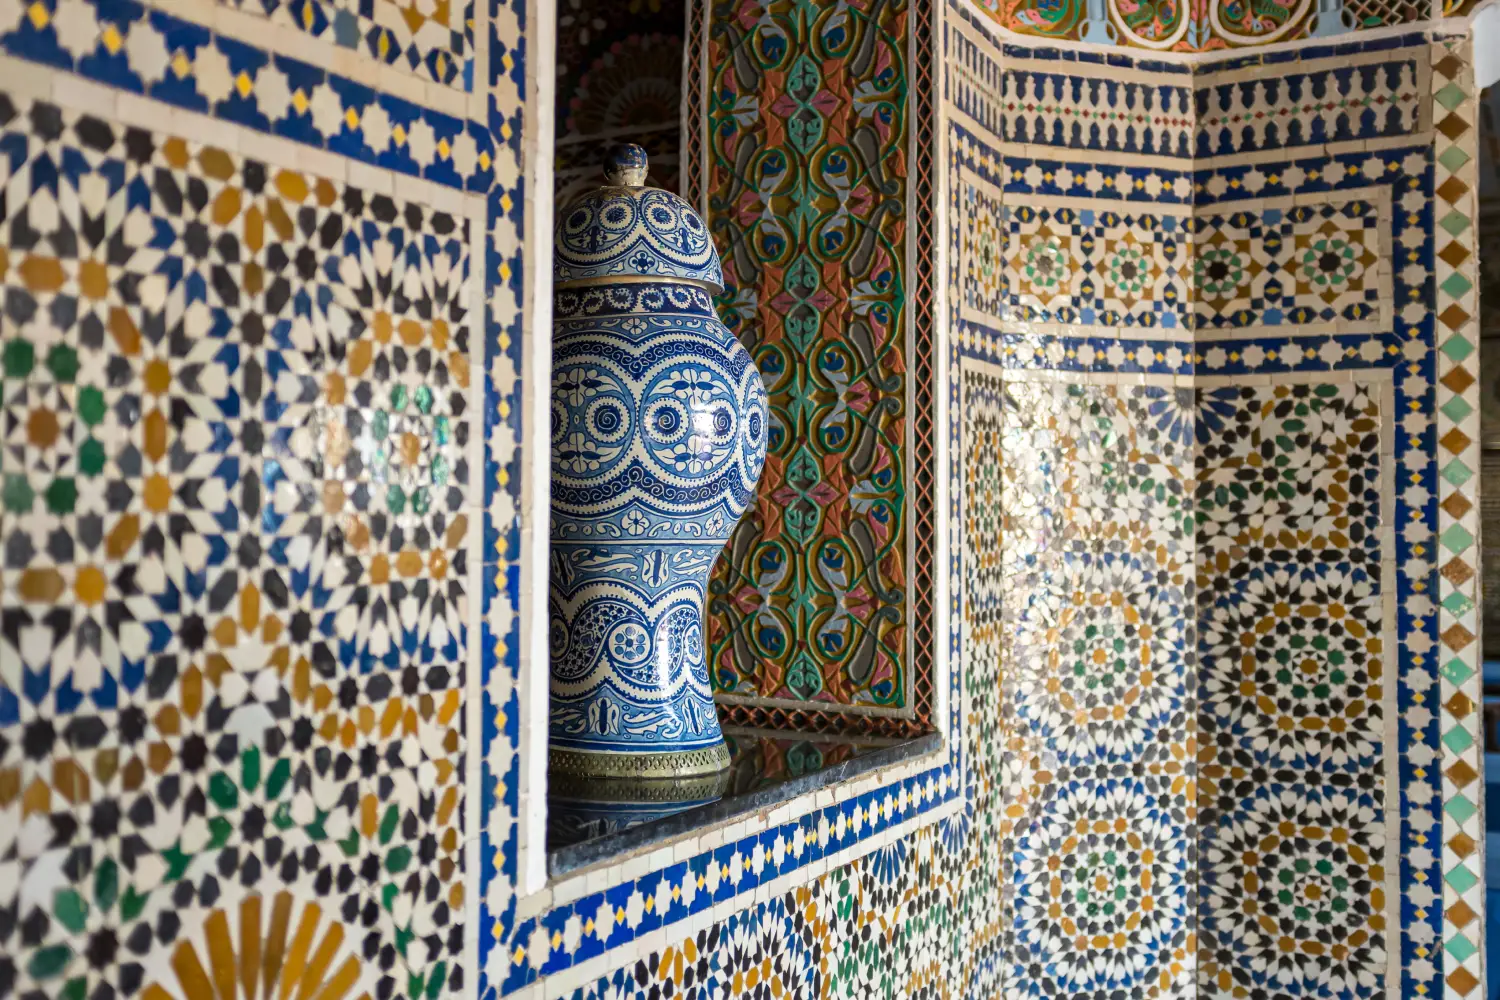 Ferry to Tangier - Zellij tiles alongside an ornate vase in Tangier, Morocco.